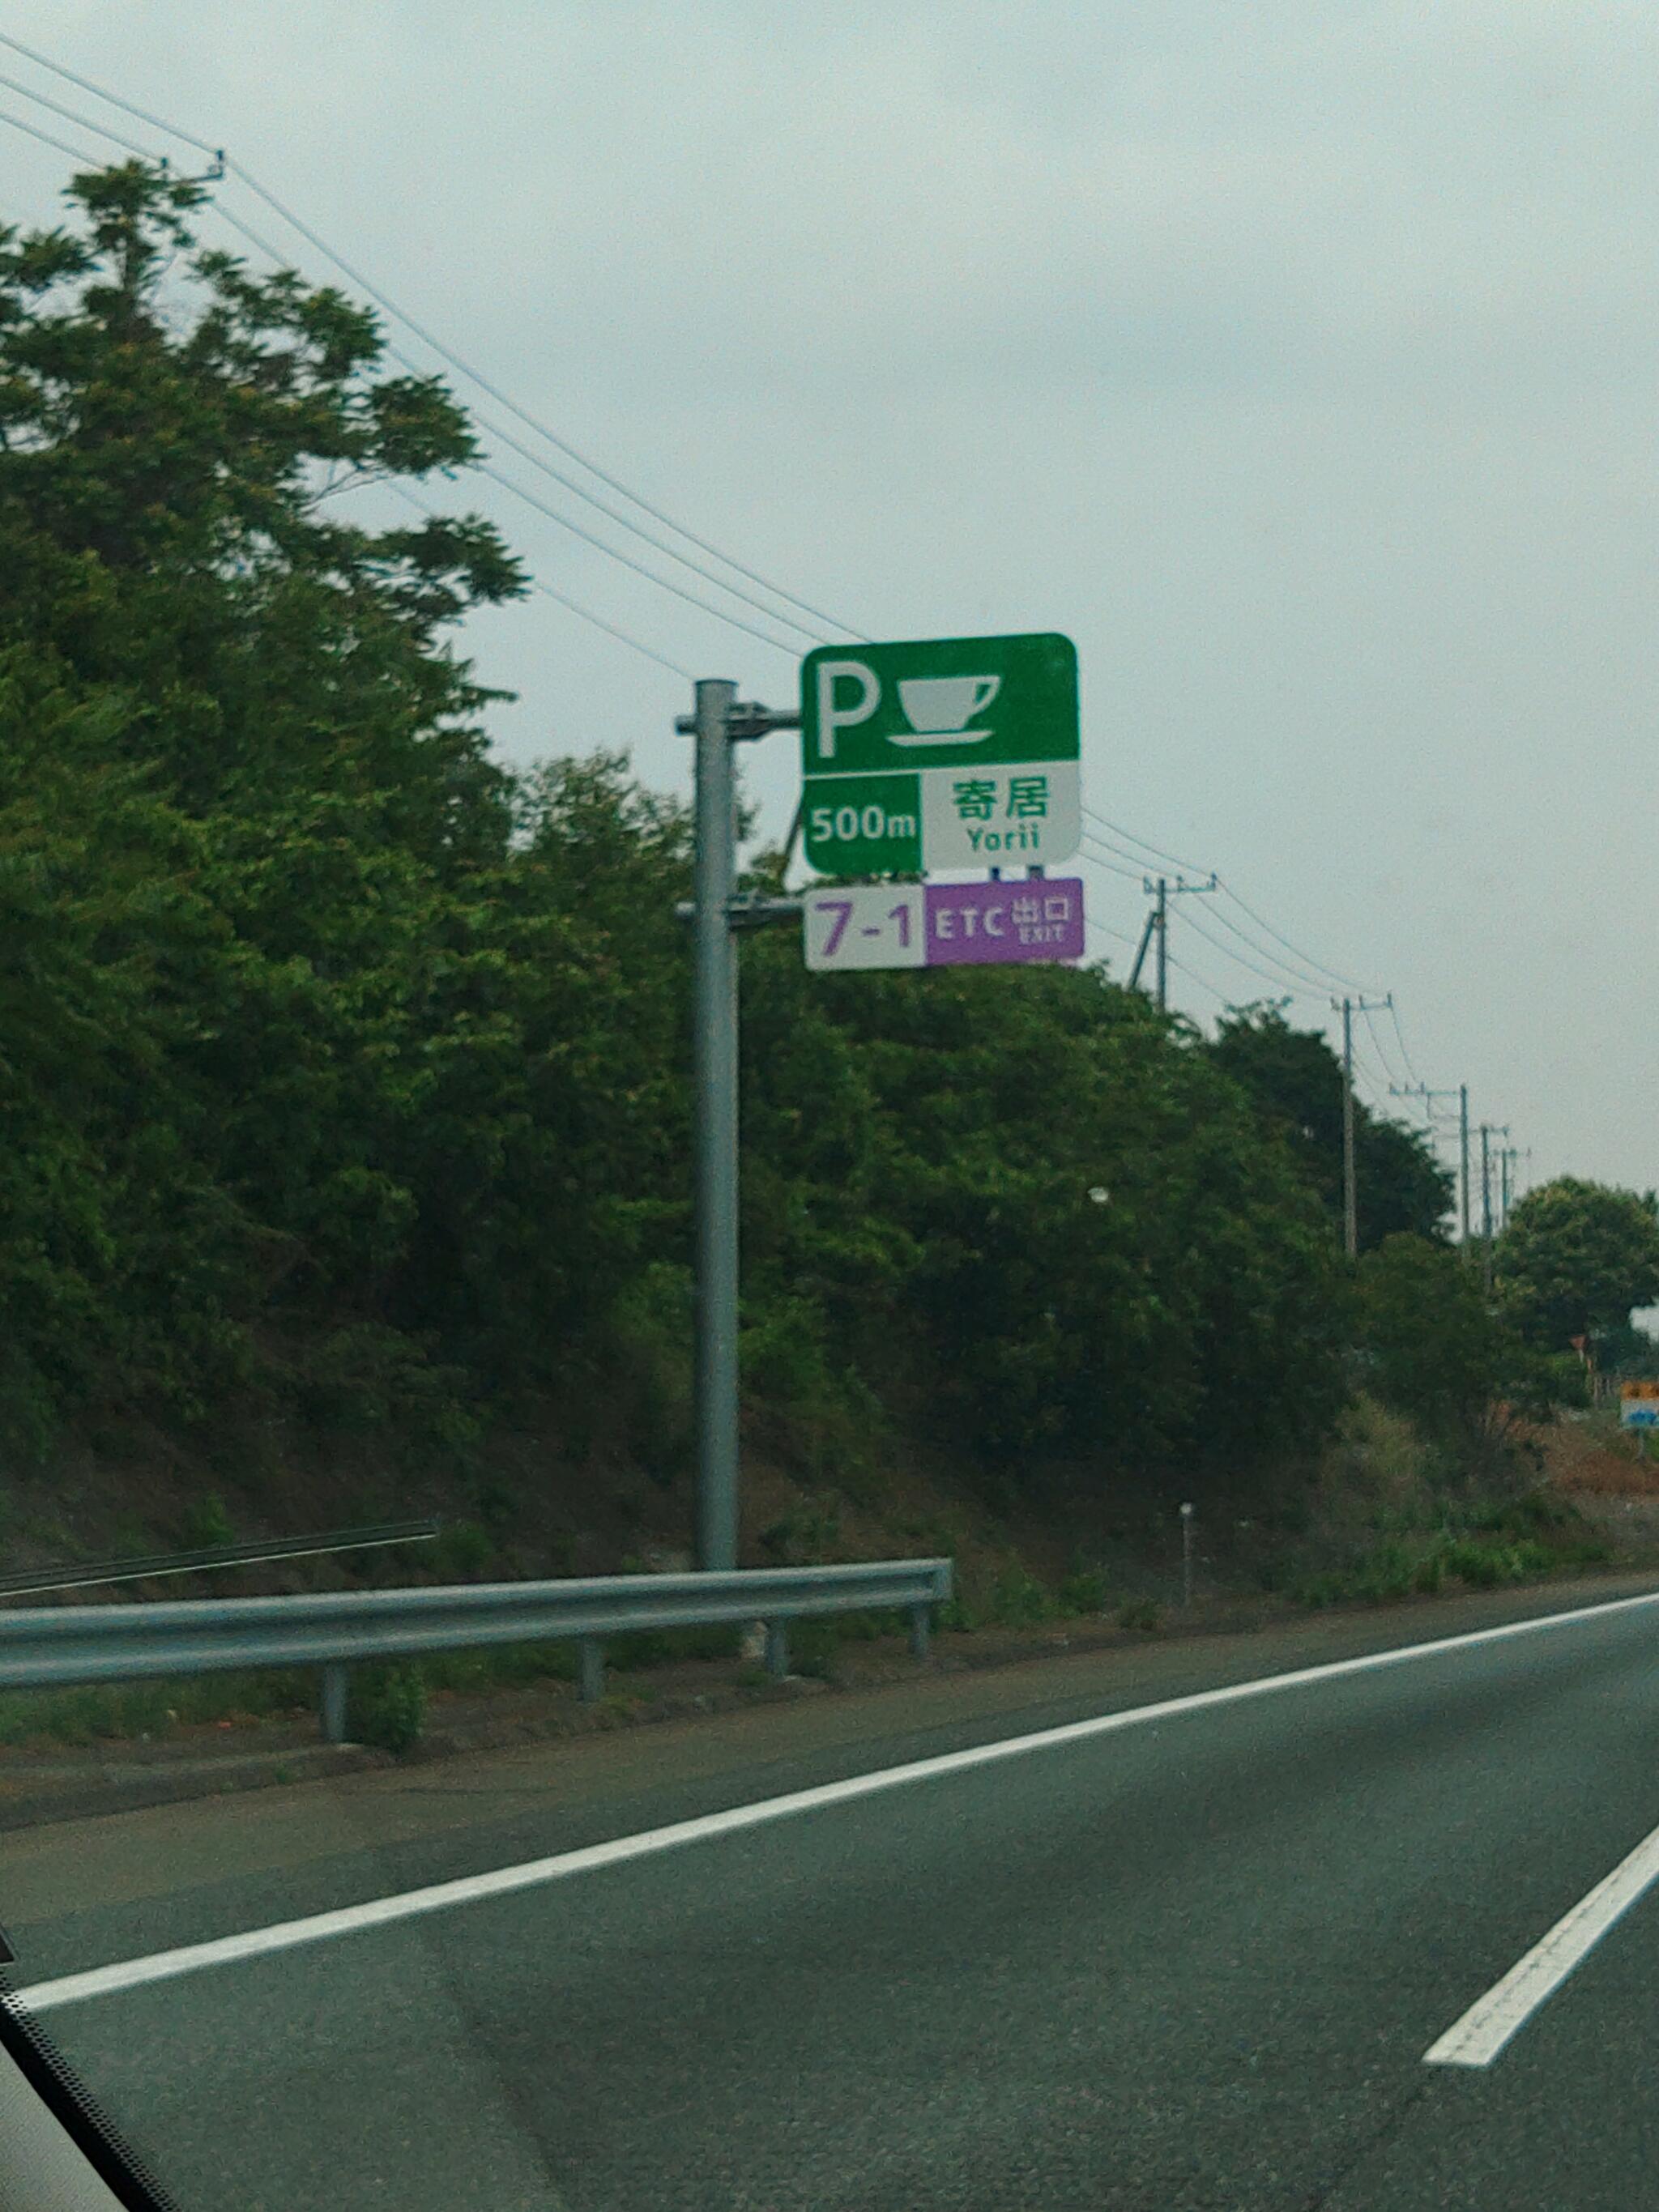 関越自動車道 寄居PA (上り)の代表写真9